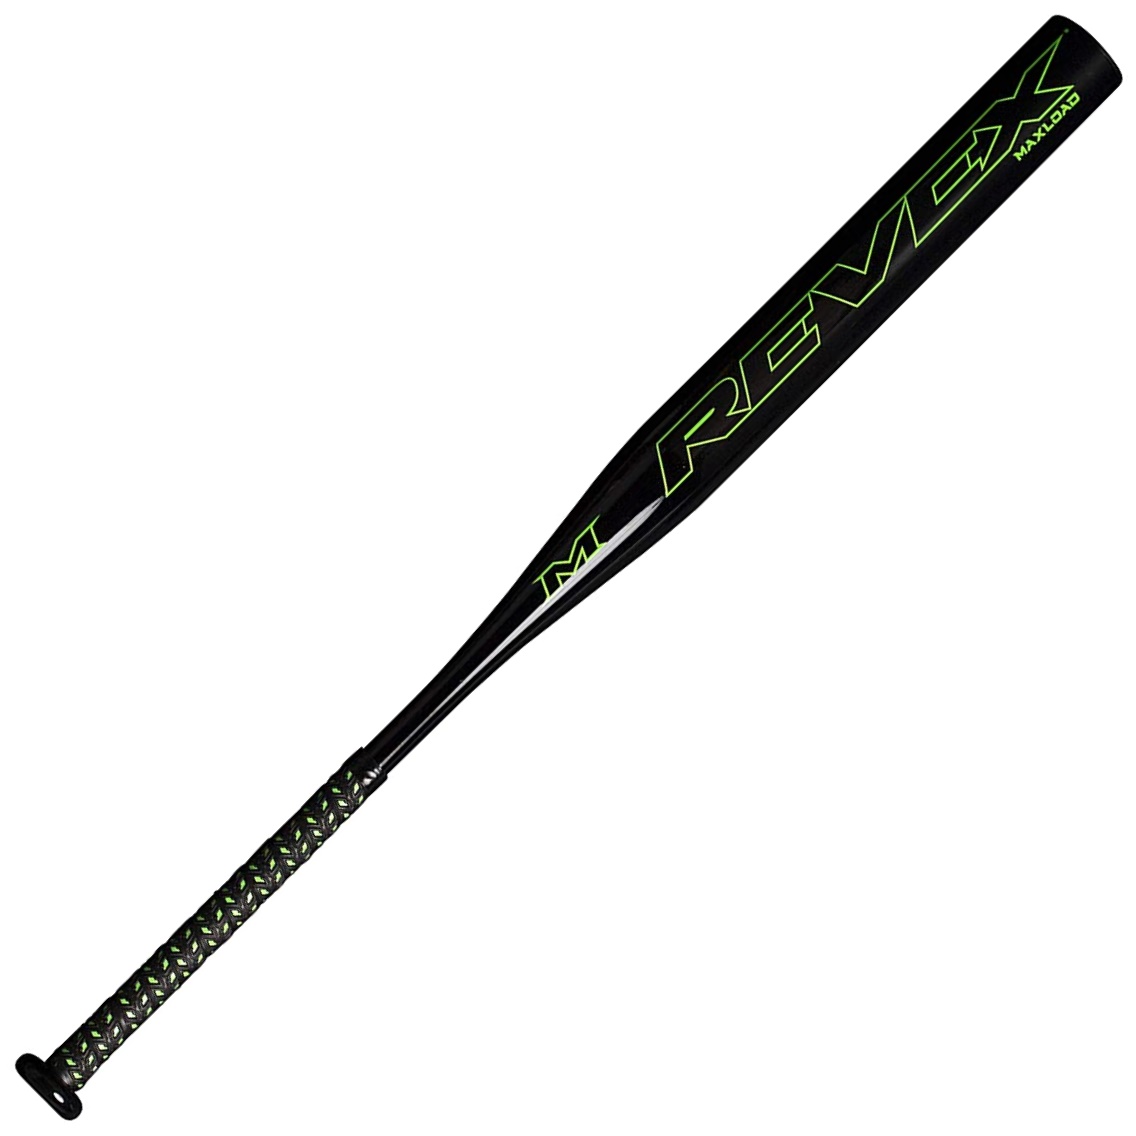 miken-rev-ex-14-one-piece-maxload-slowpitch-softball-bat-34-inch-25-oz MREV21-3-25 Miken  The Miken 2021 Rev-Ex Maxload all association bat delivers a solid